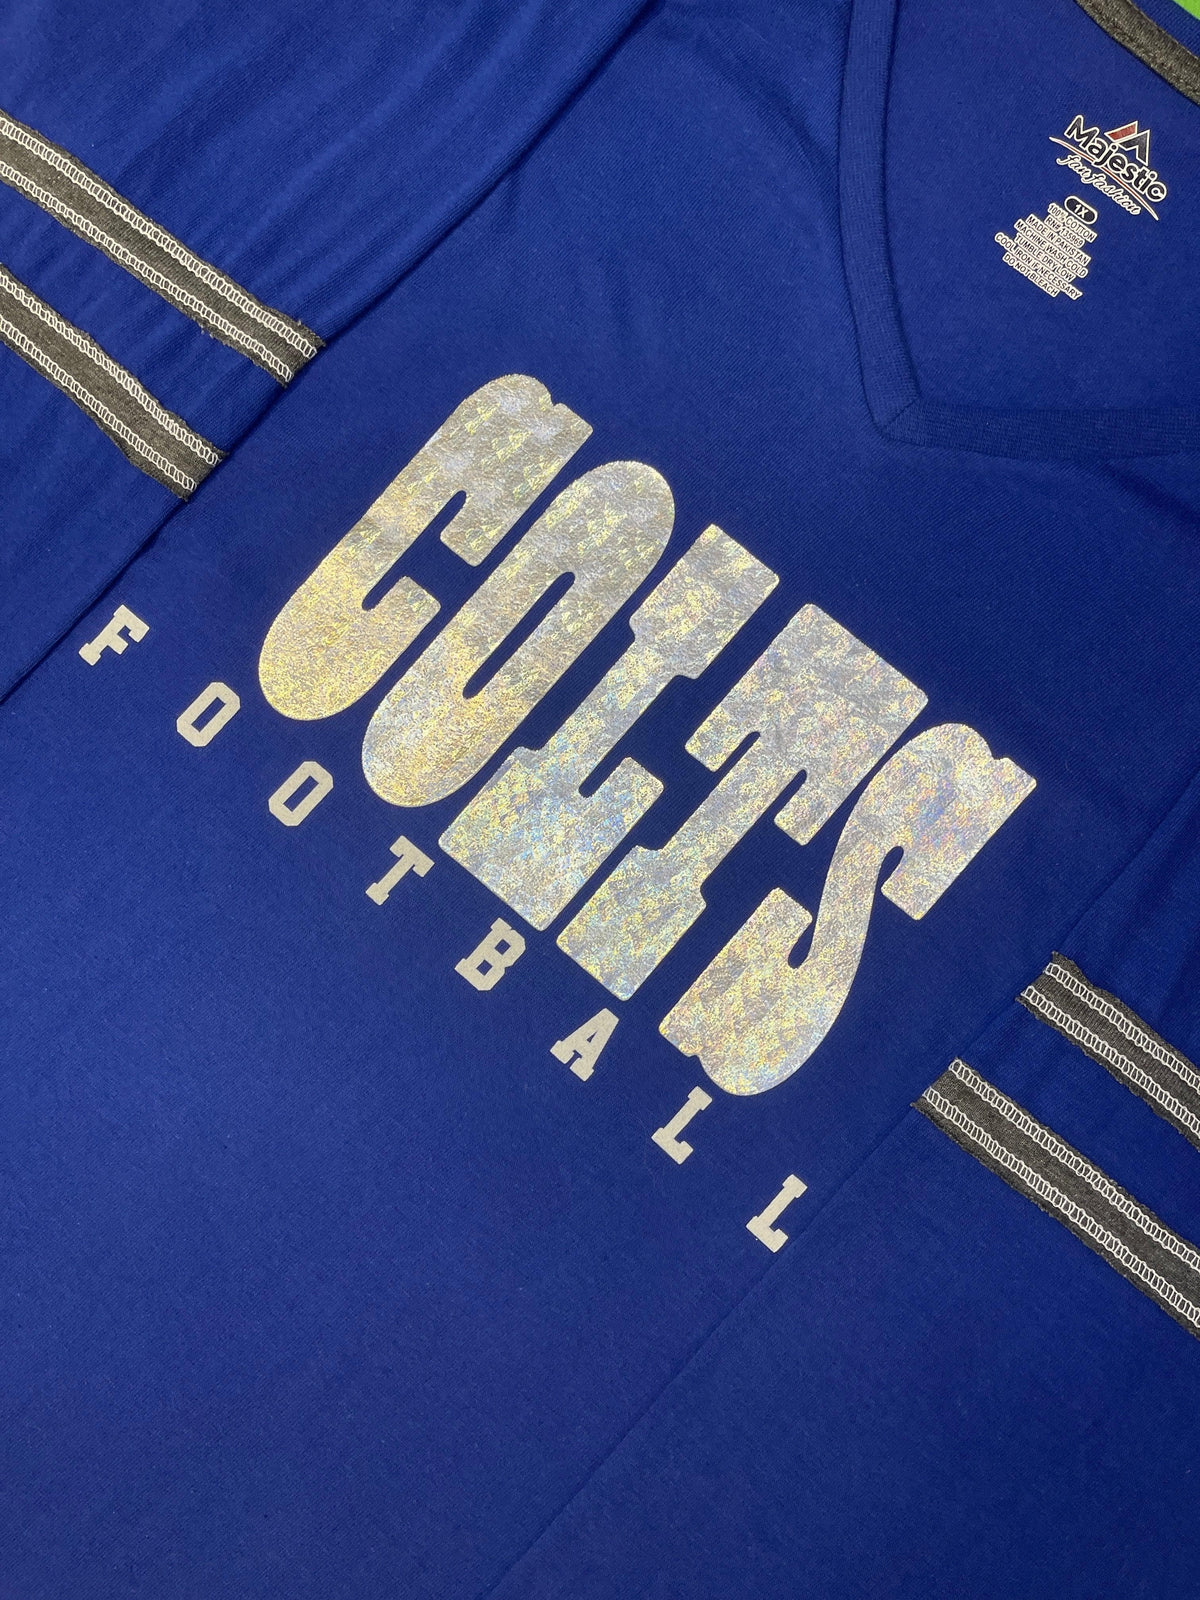 NFL Indianapolis Colts Majestic L/S Plus Size T-Shirt Women's X-Large NWT